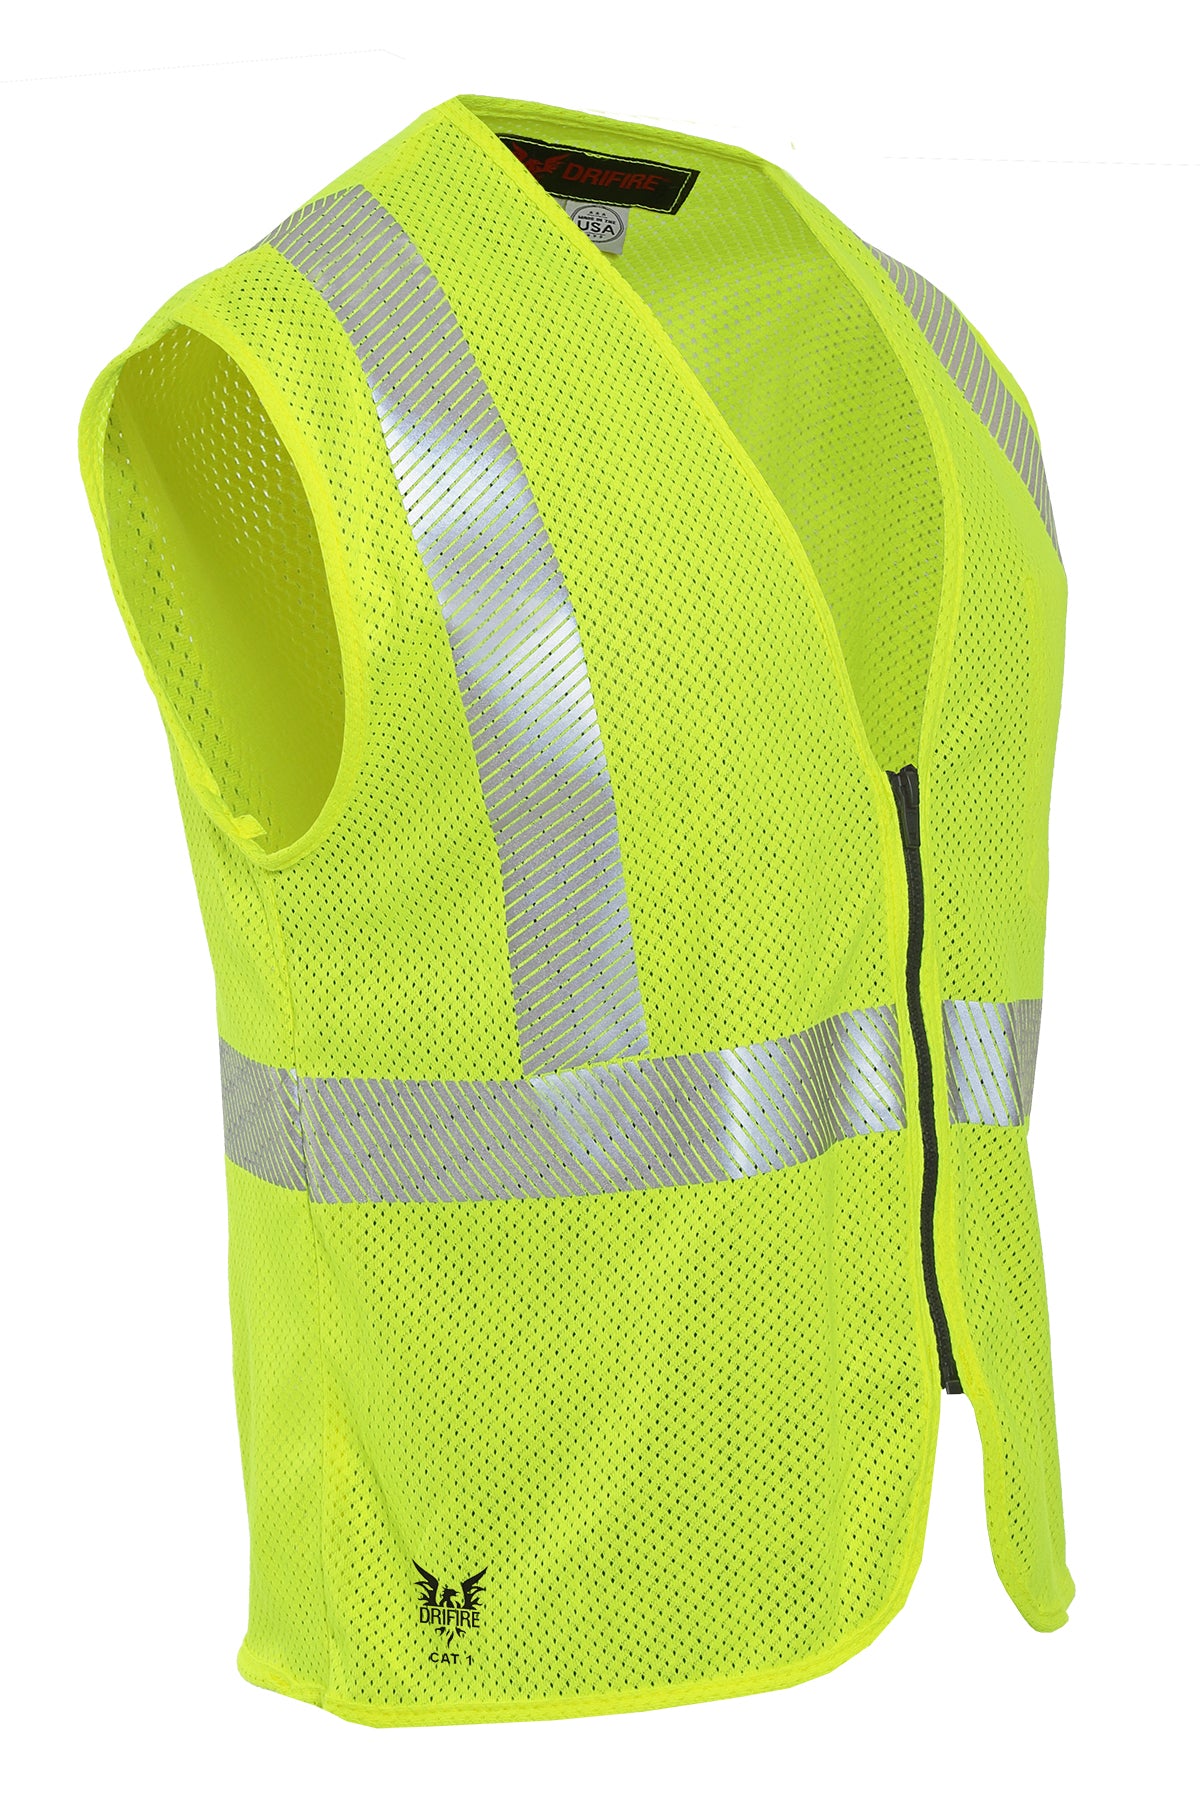 National Safety Apparel Drifire FR Hi Vis Mesh Vest Zip Front, Class 2, 4.6 cal/cm² (each)